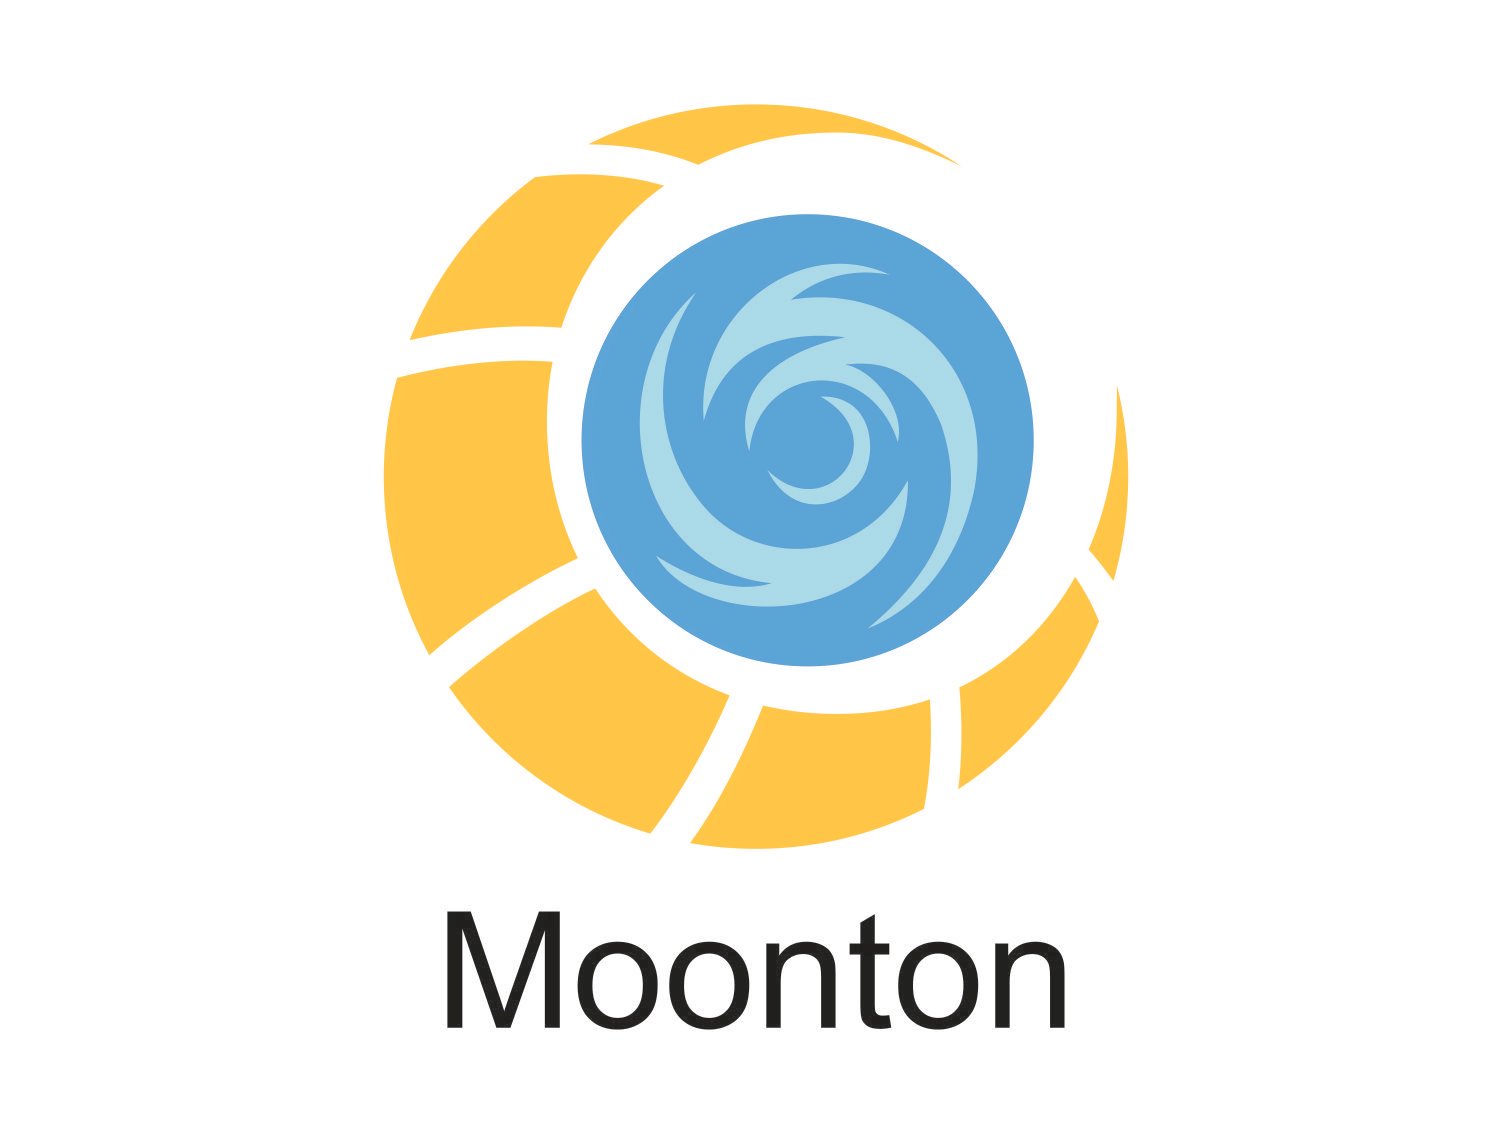 Moonton Logo